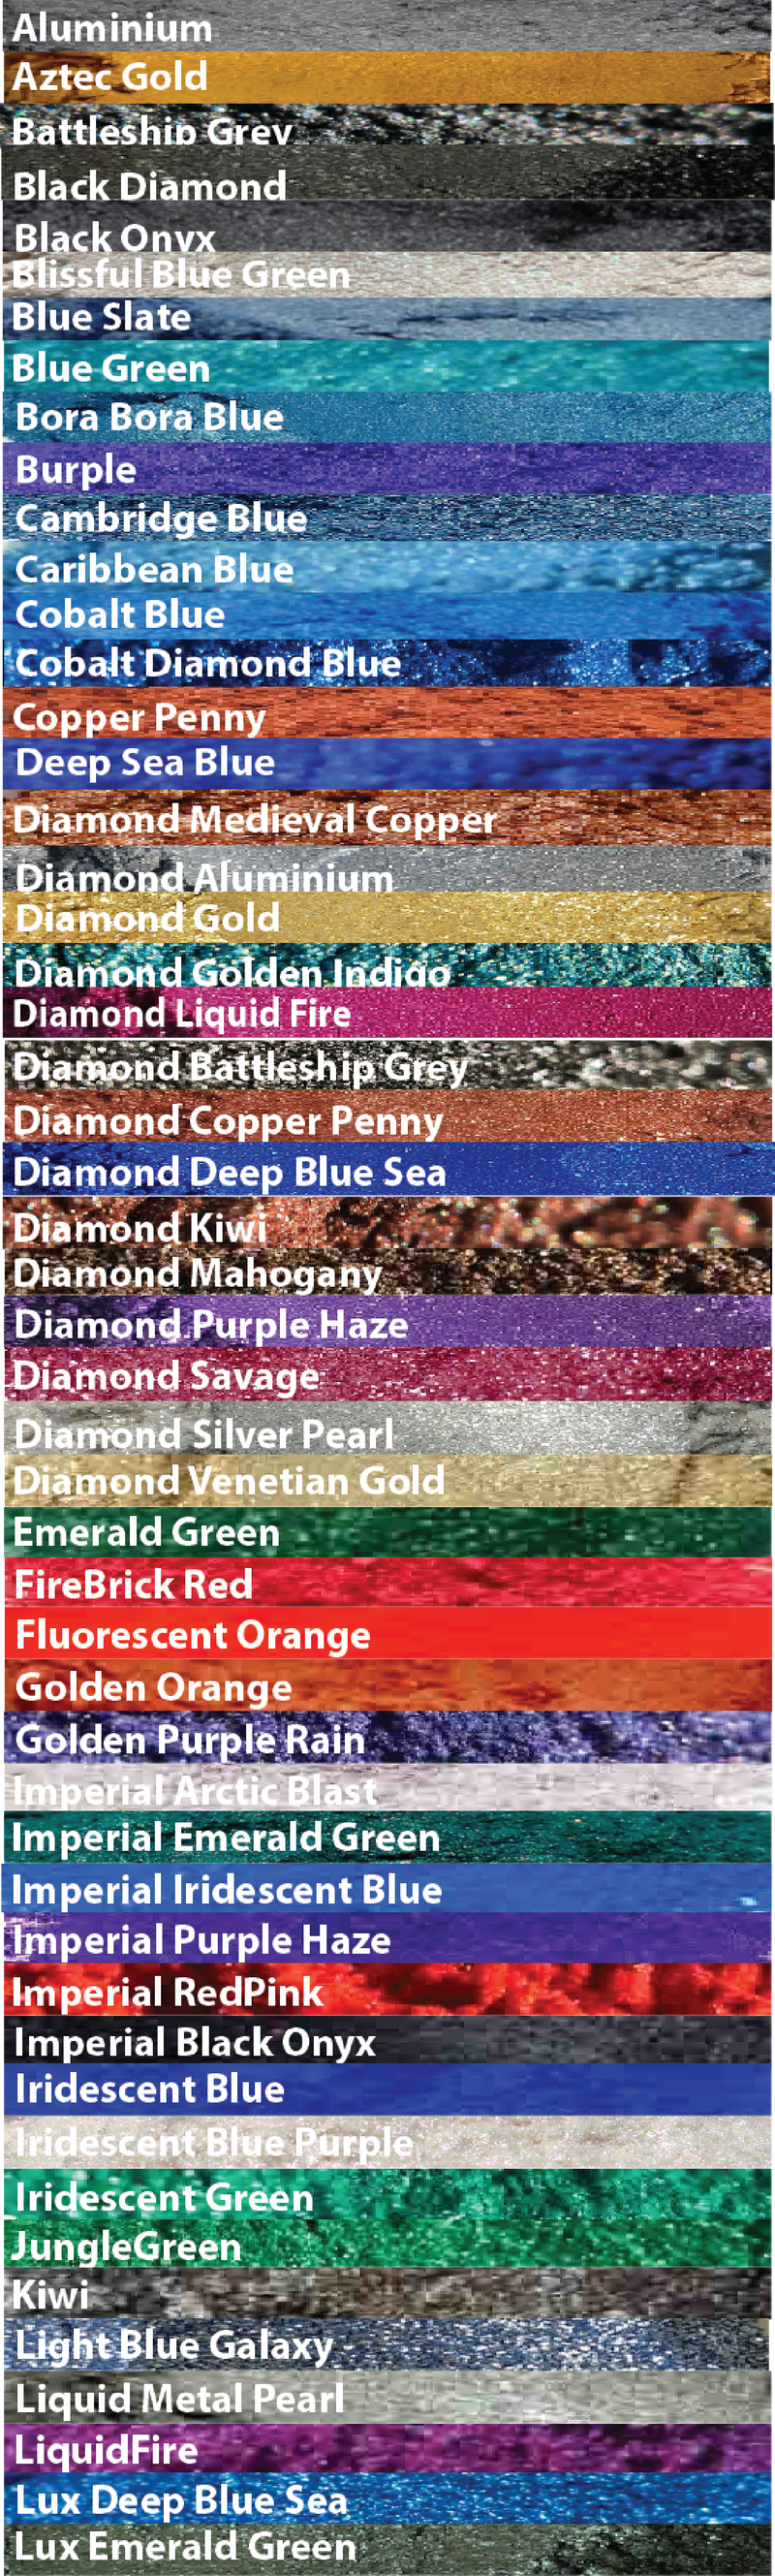 42g "DIAMOND SAVAGE" Make-A-Wish Black Diamond Pigments